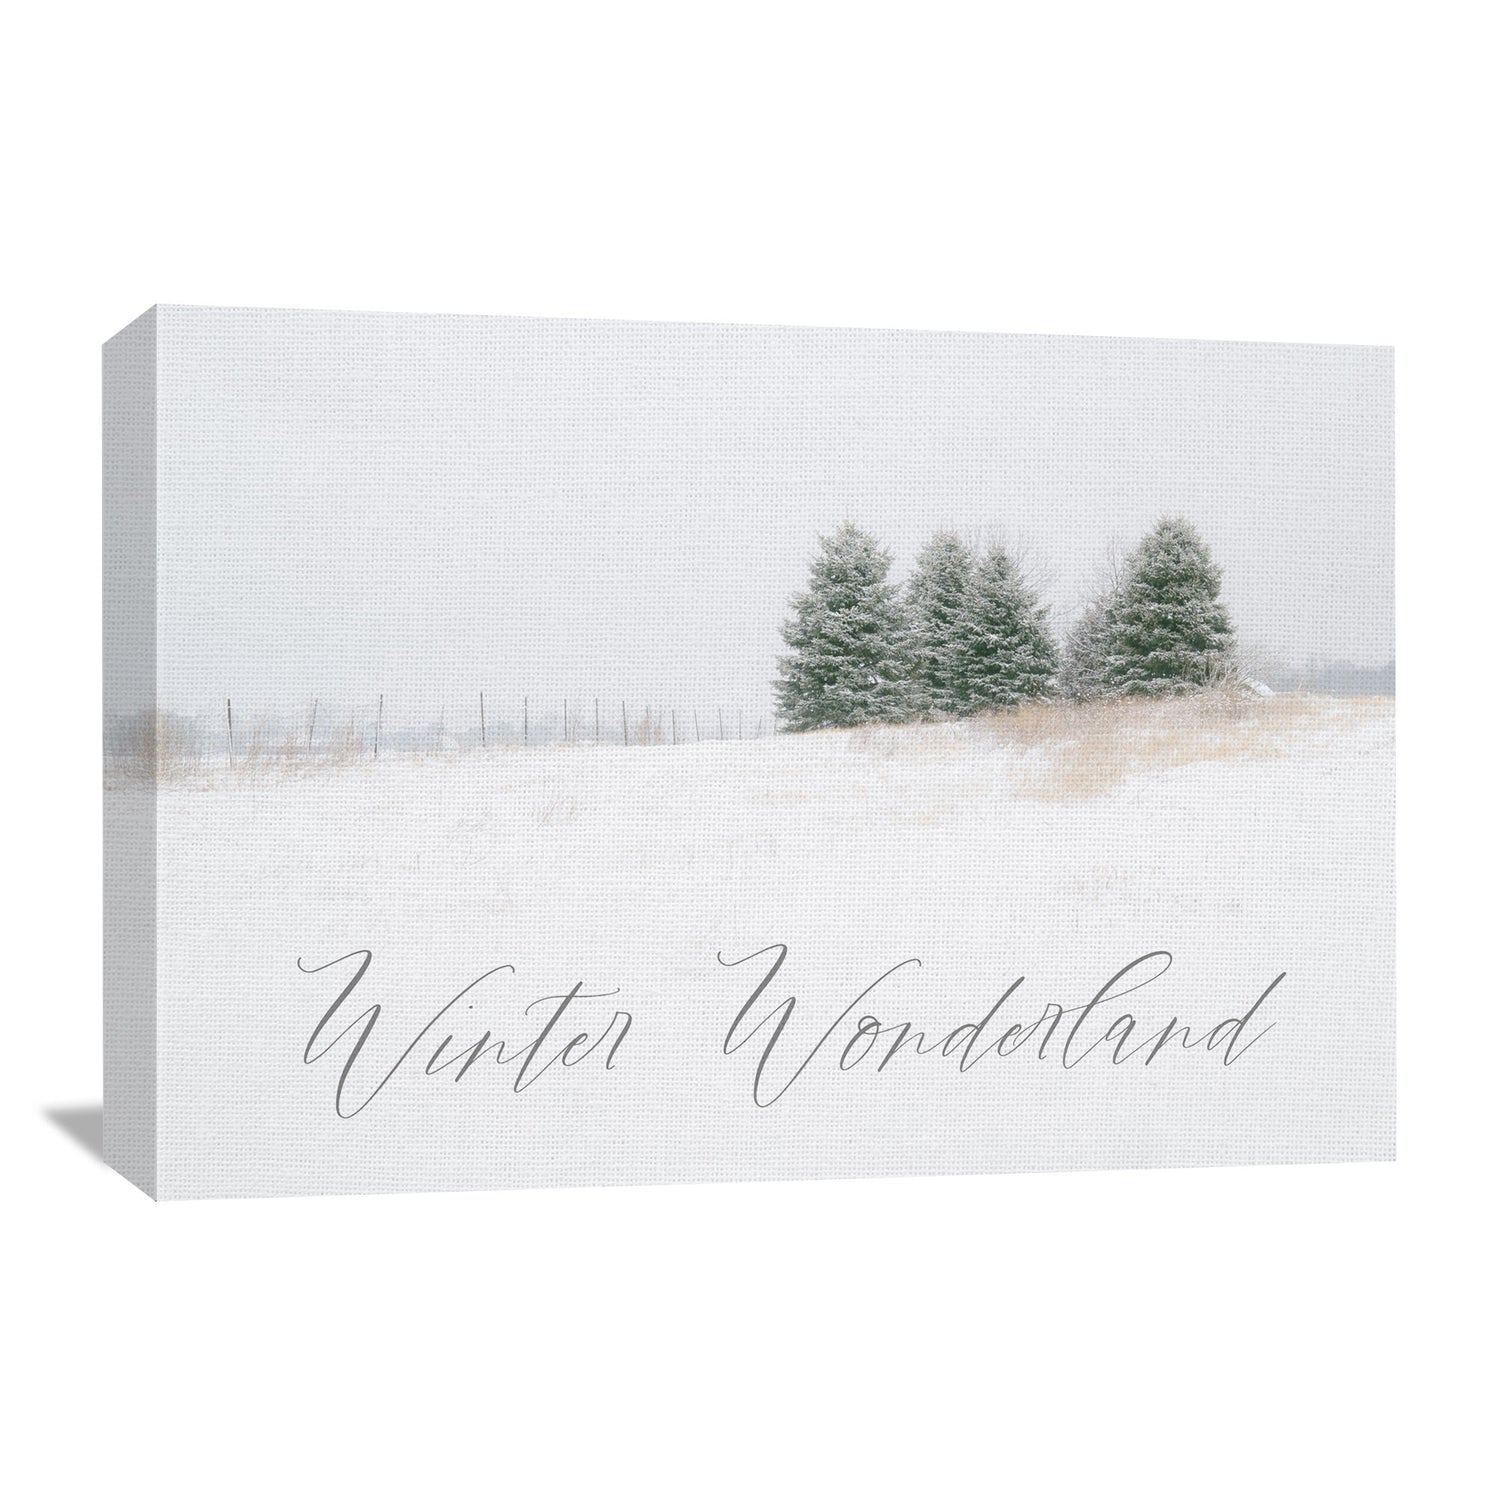 winter pines canvas wall art with winter wonderlland script